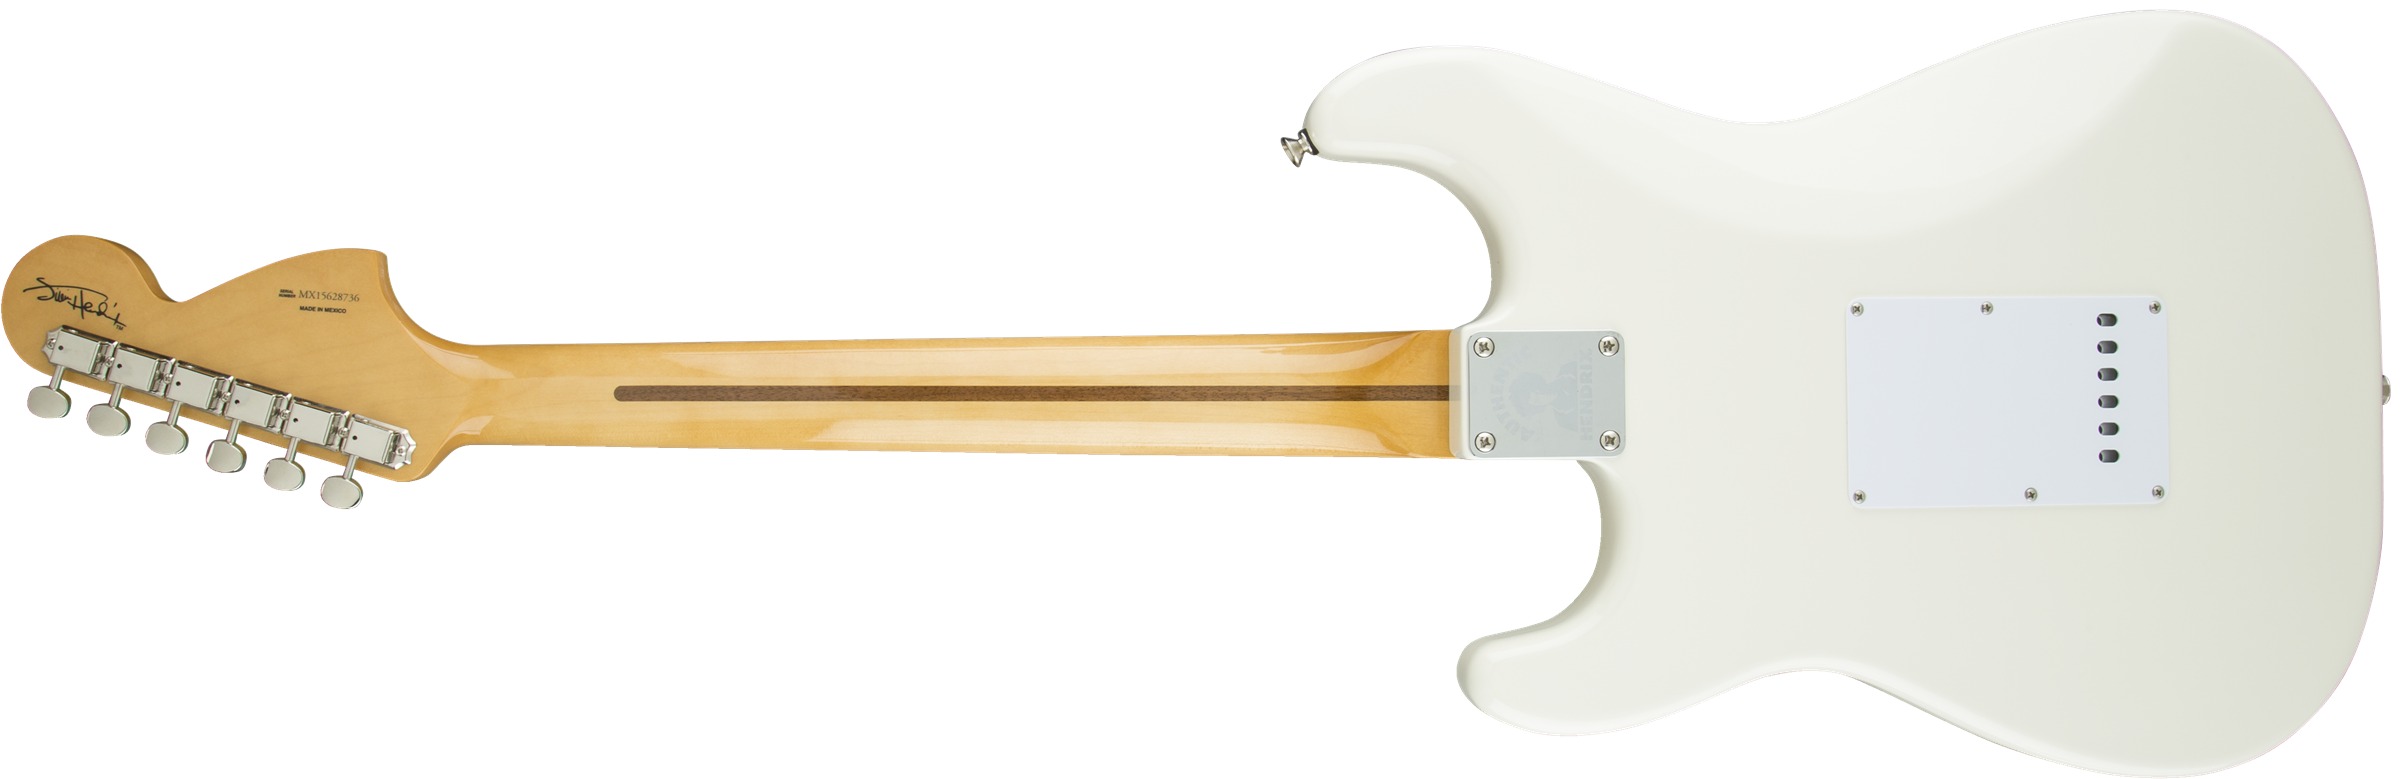 Fender Jimi Hendrix Stratocaster (mex, Mn) - Olympic White - Guitare Électrique Forme Str - Variation 1